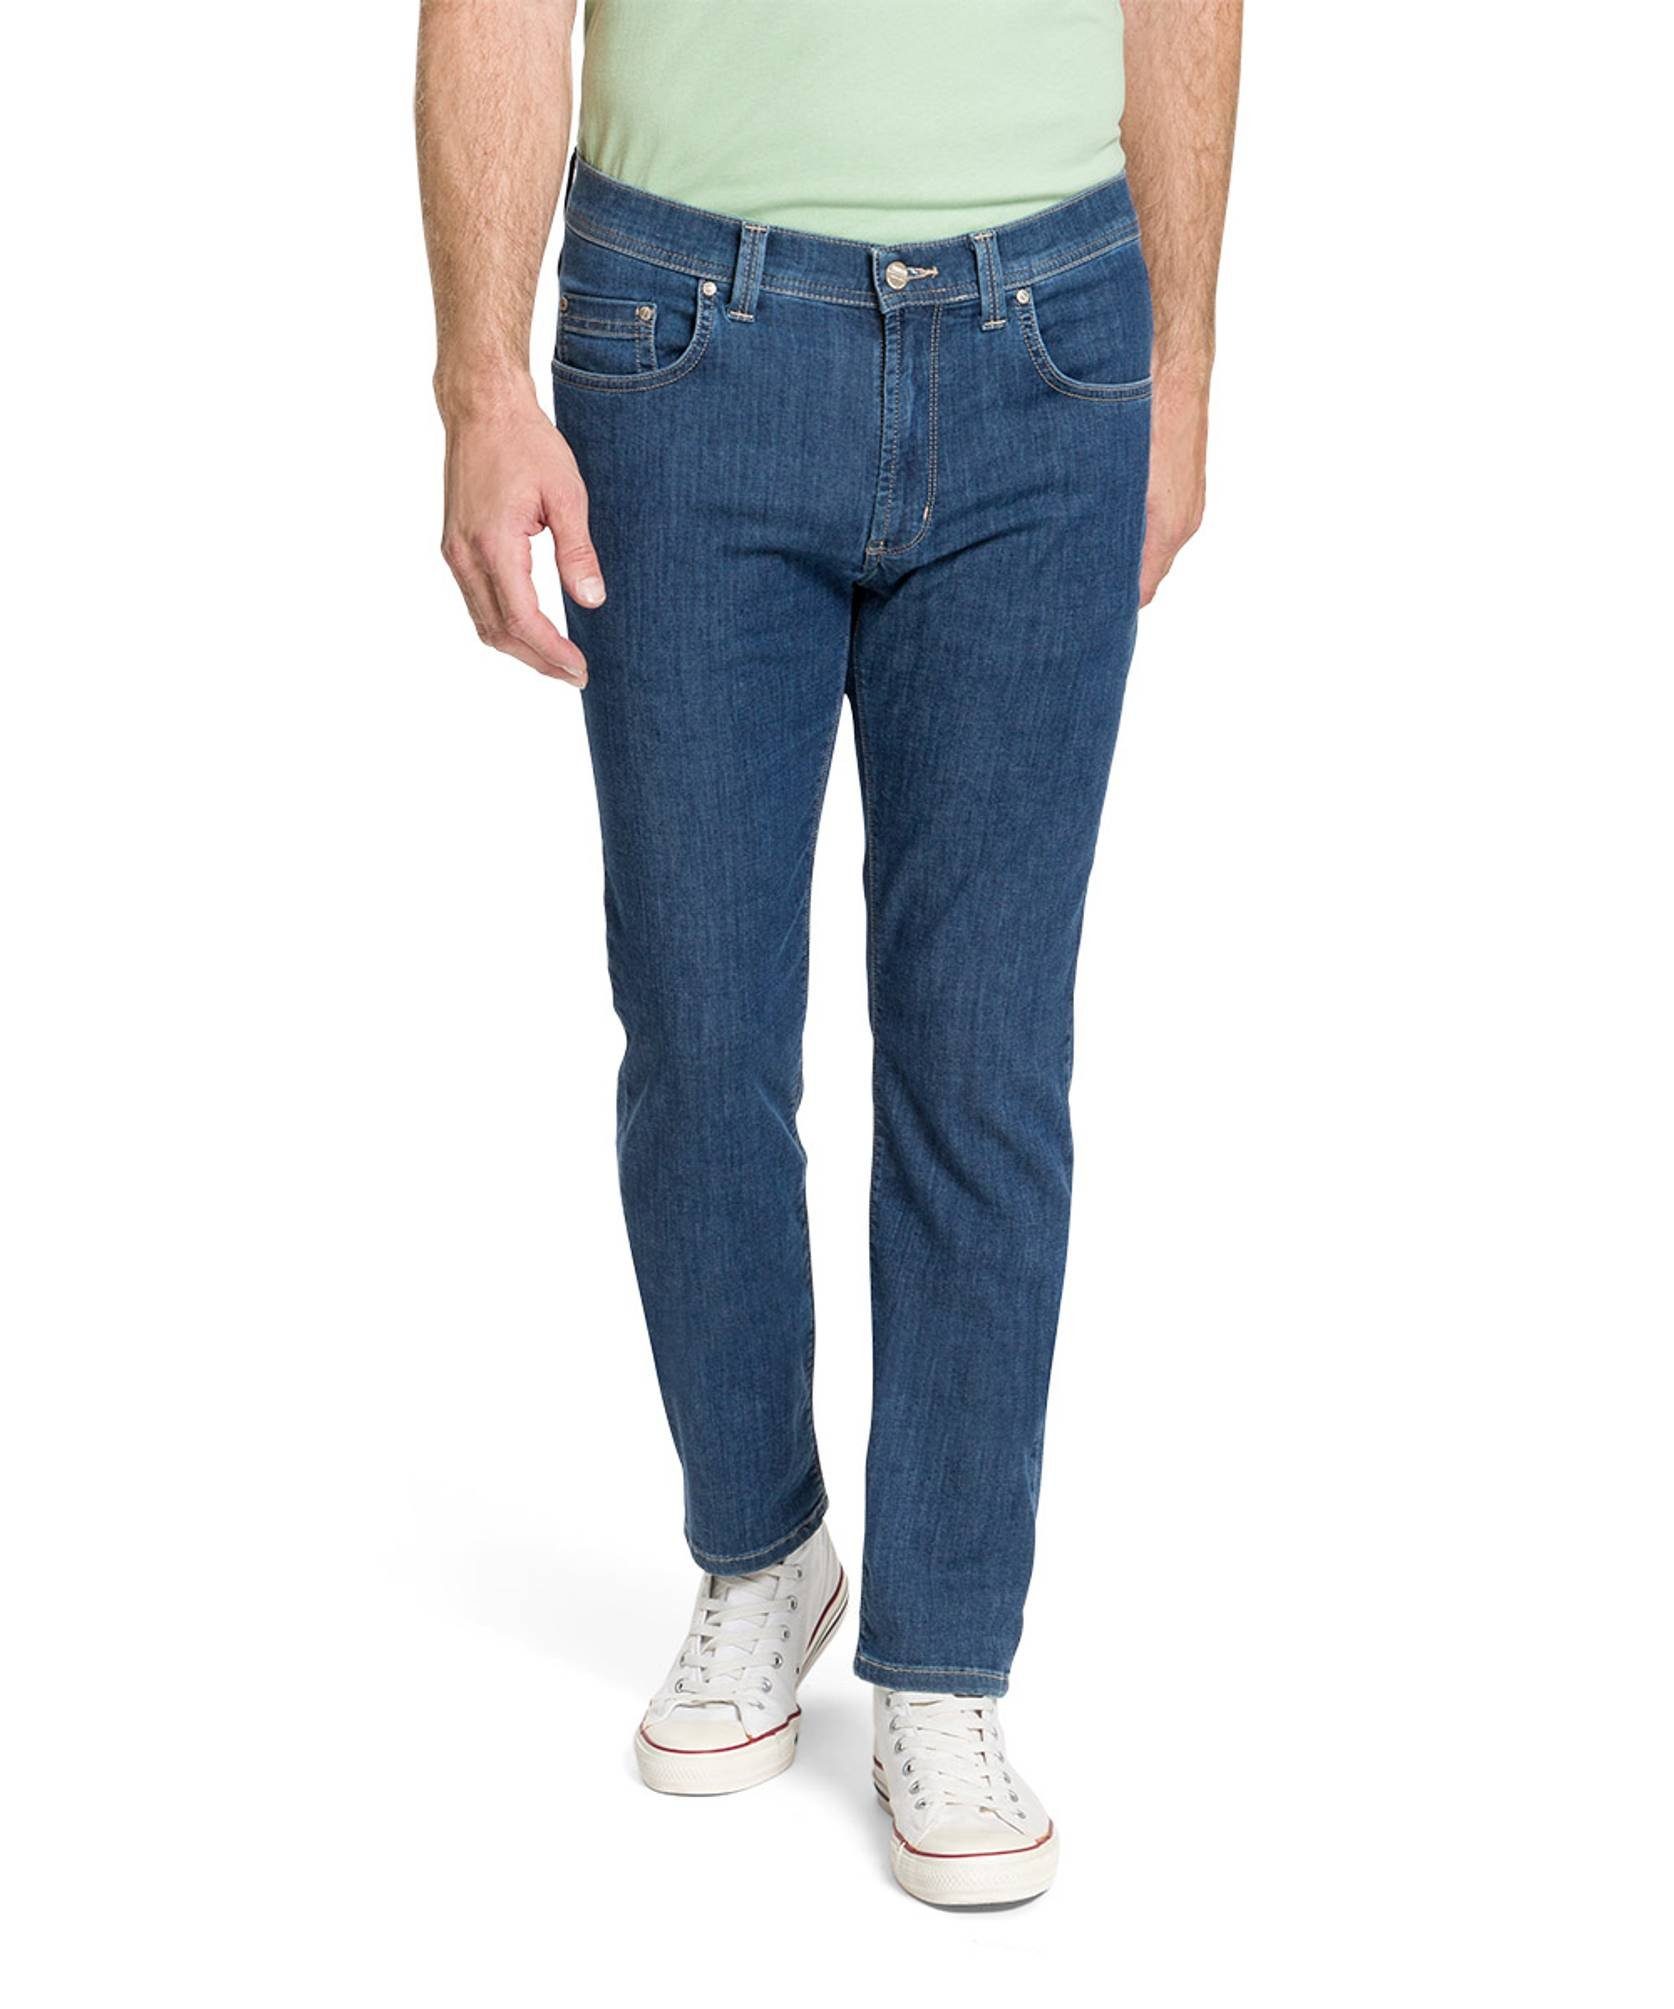 Pioneer Authentic Jeans 5-Pocket-Jeans stonewash PO blue 16801.6615 kernig (6821)